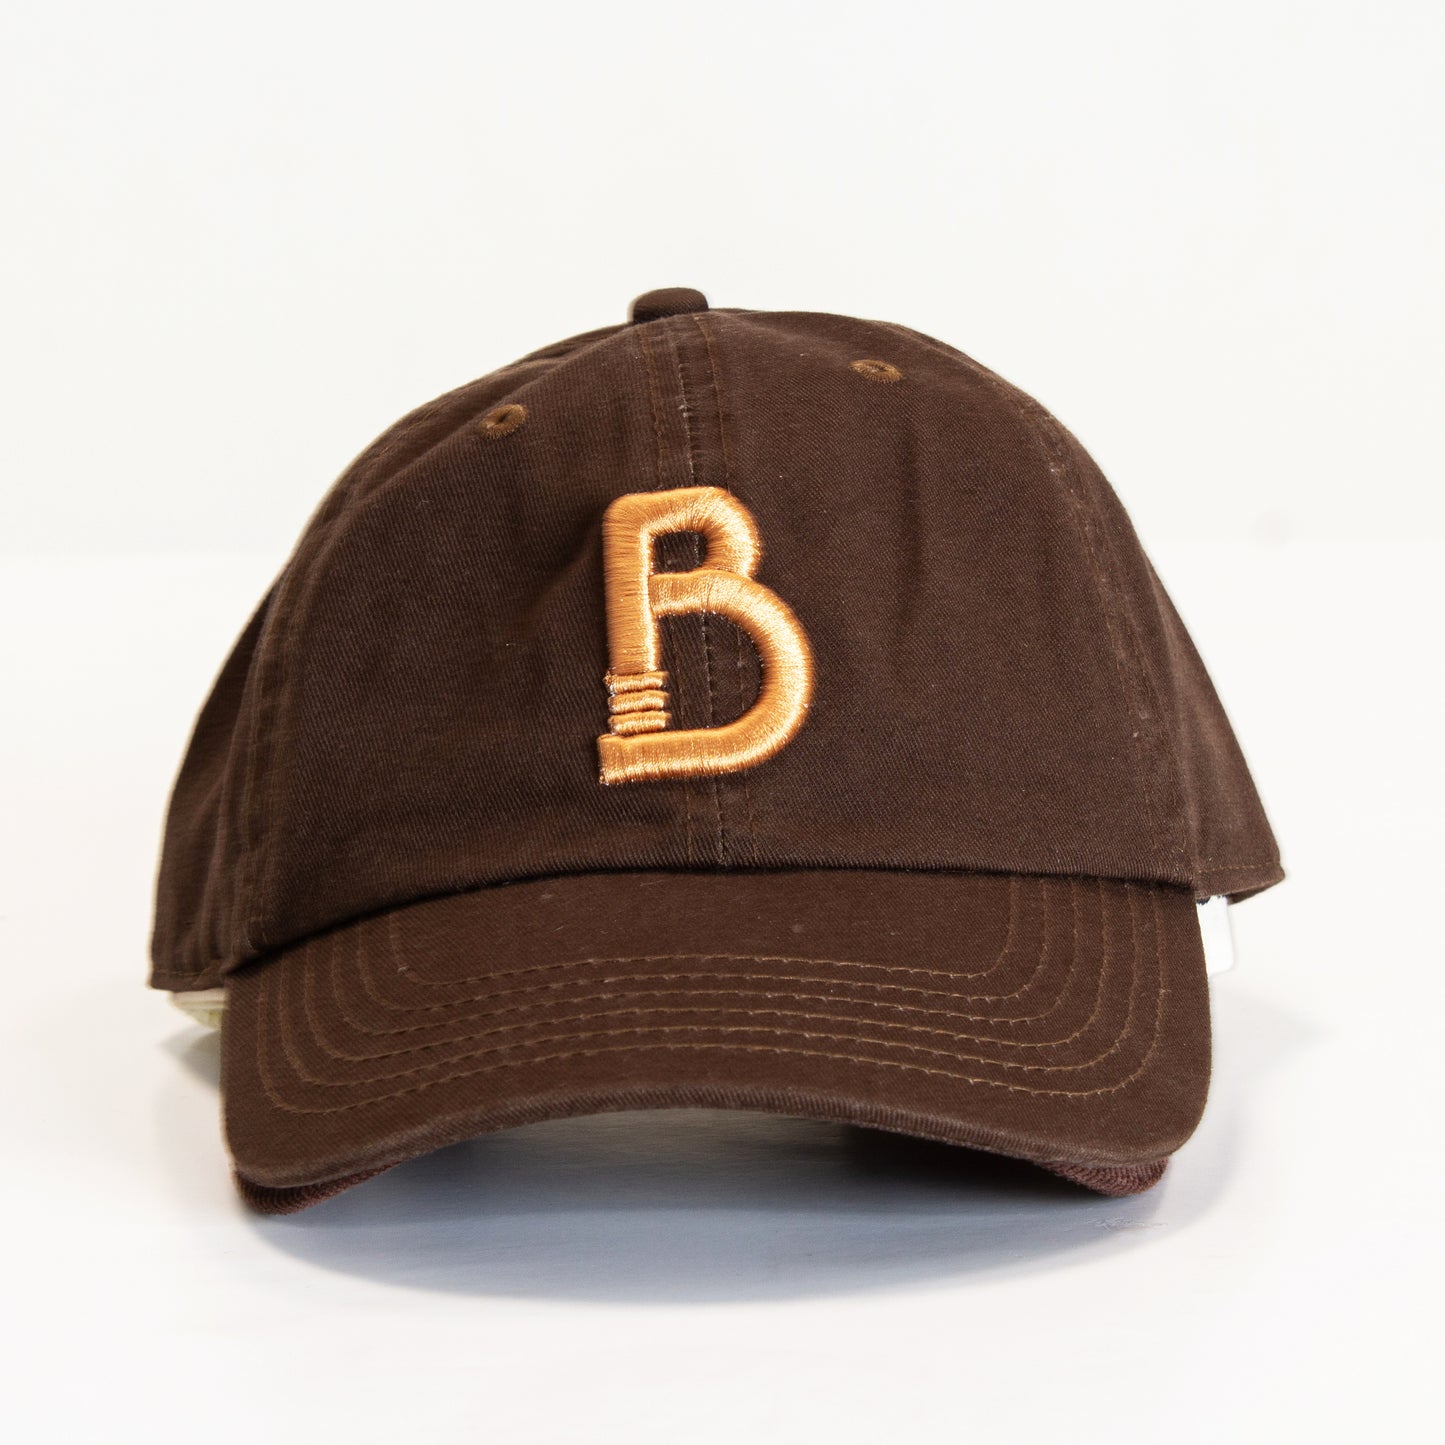 Retro "B" Dad Hat